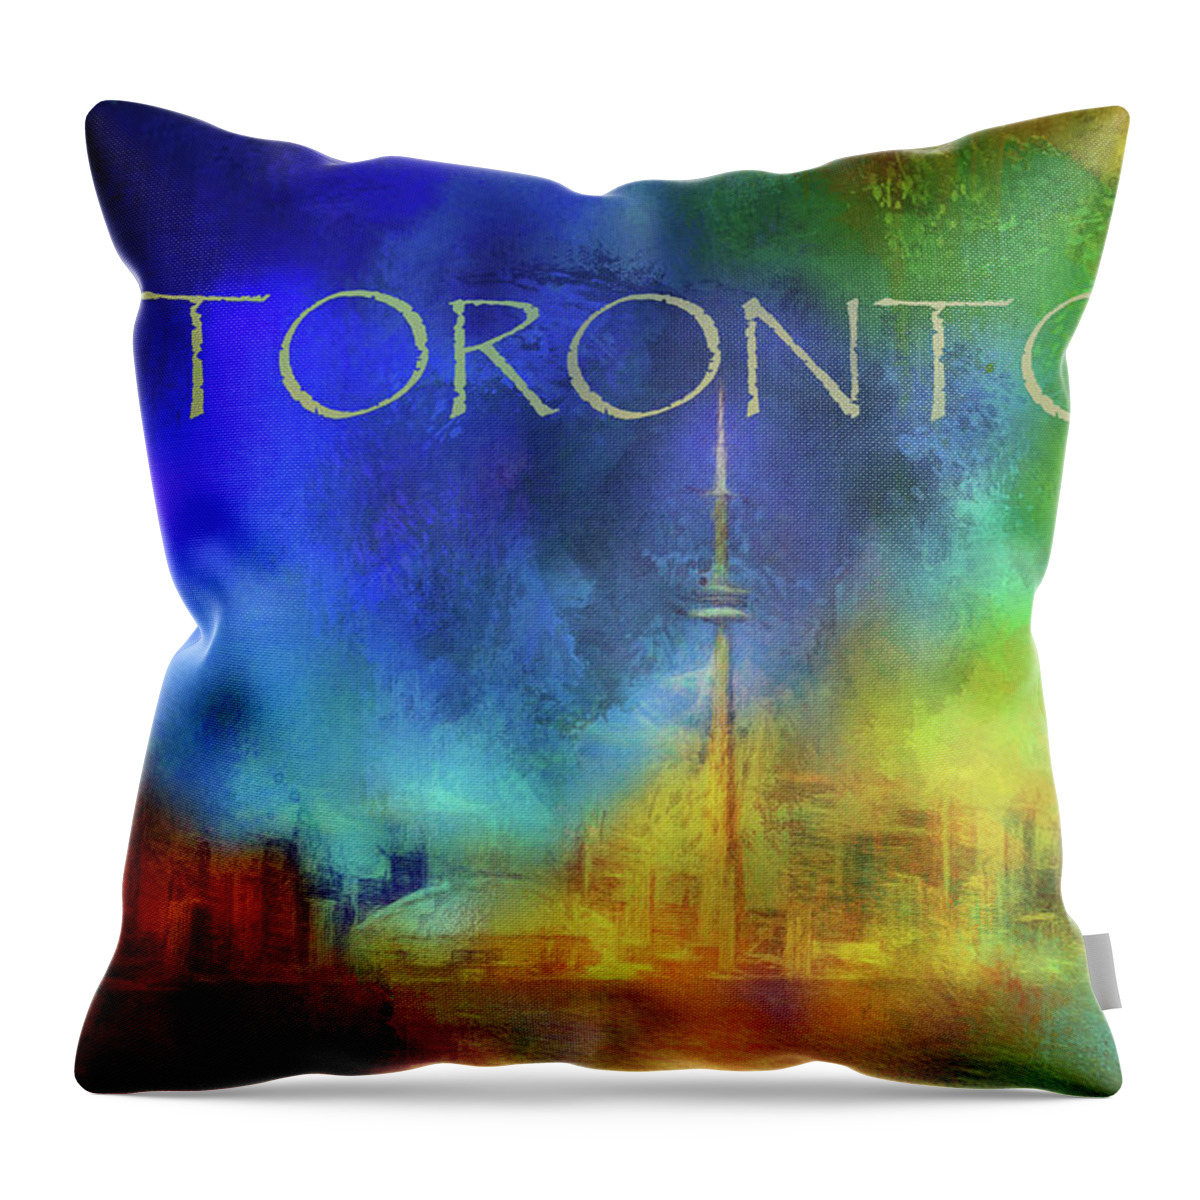 Toronto Throw Pillow featuring the digital art Toronto - Cityscape by Nicky Jameson